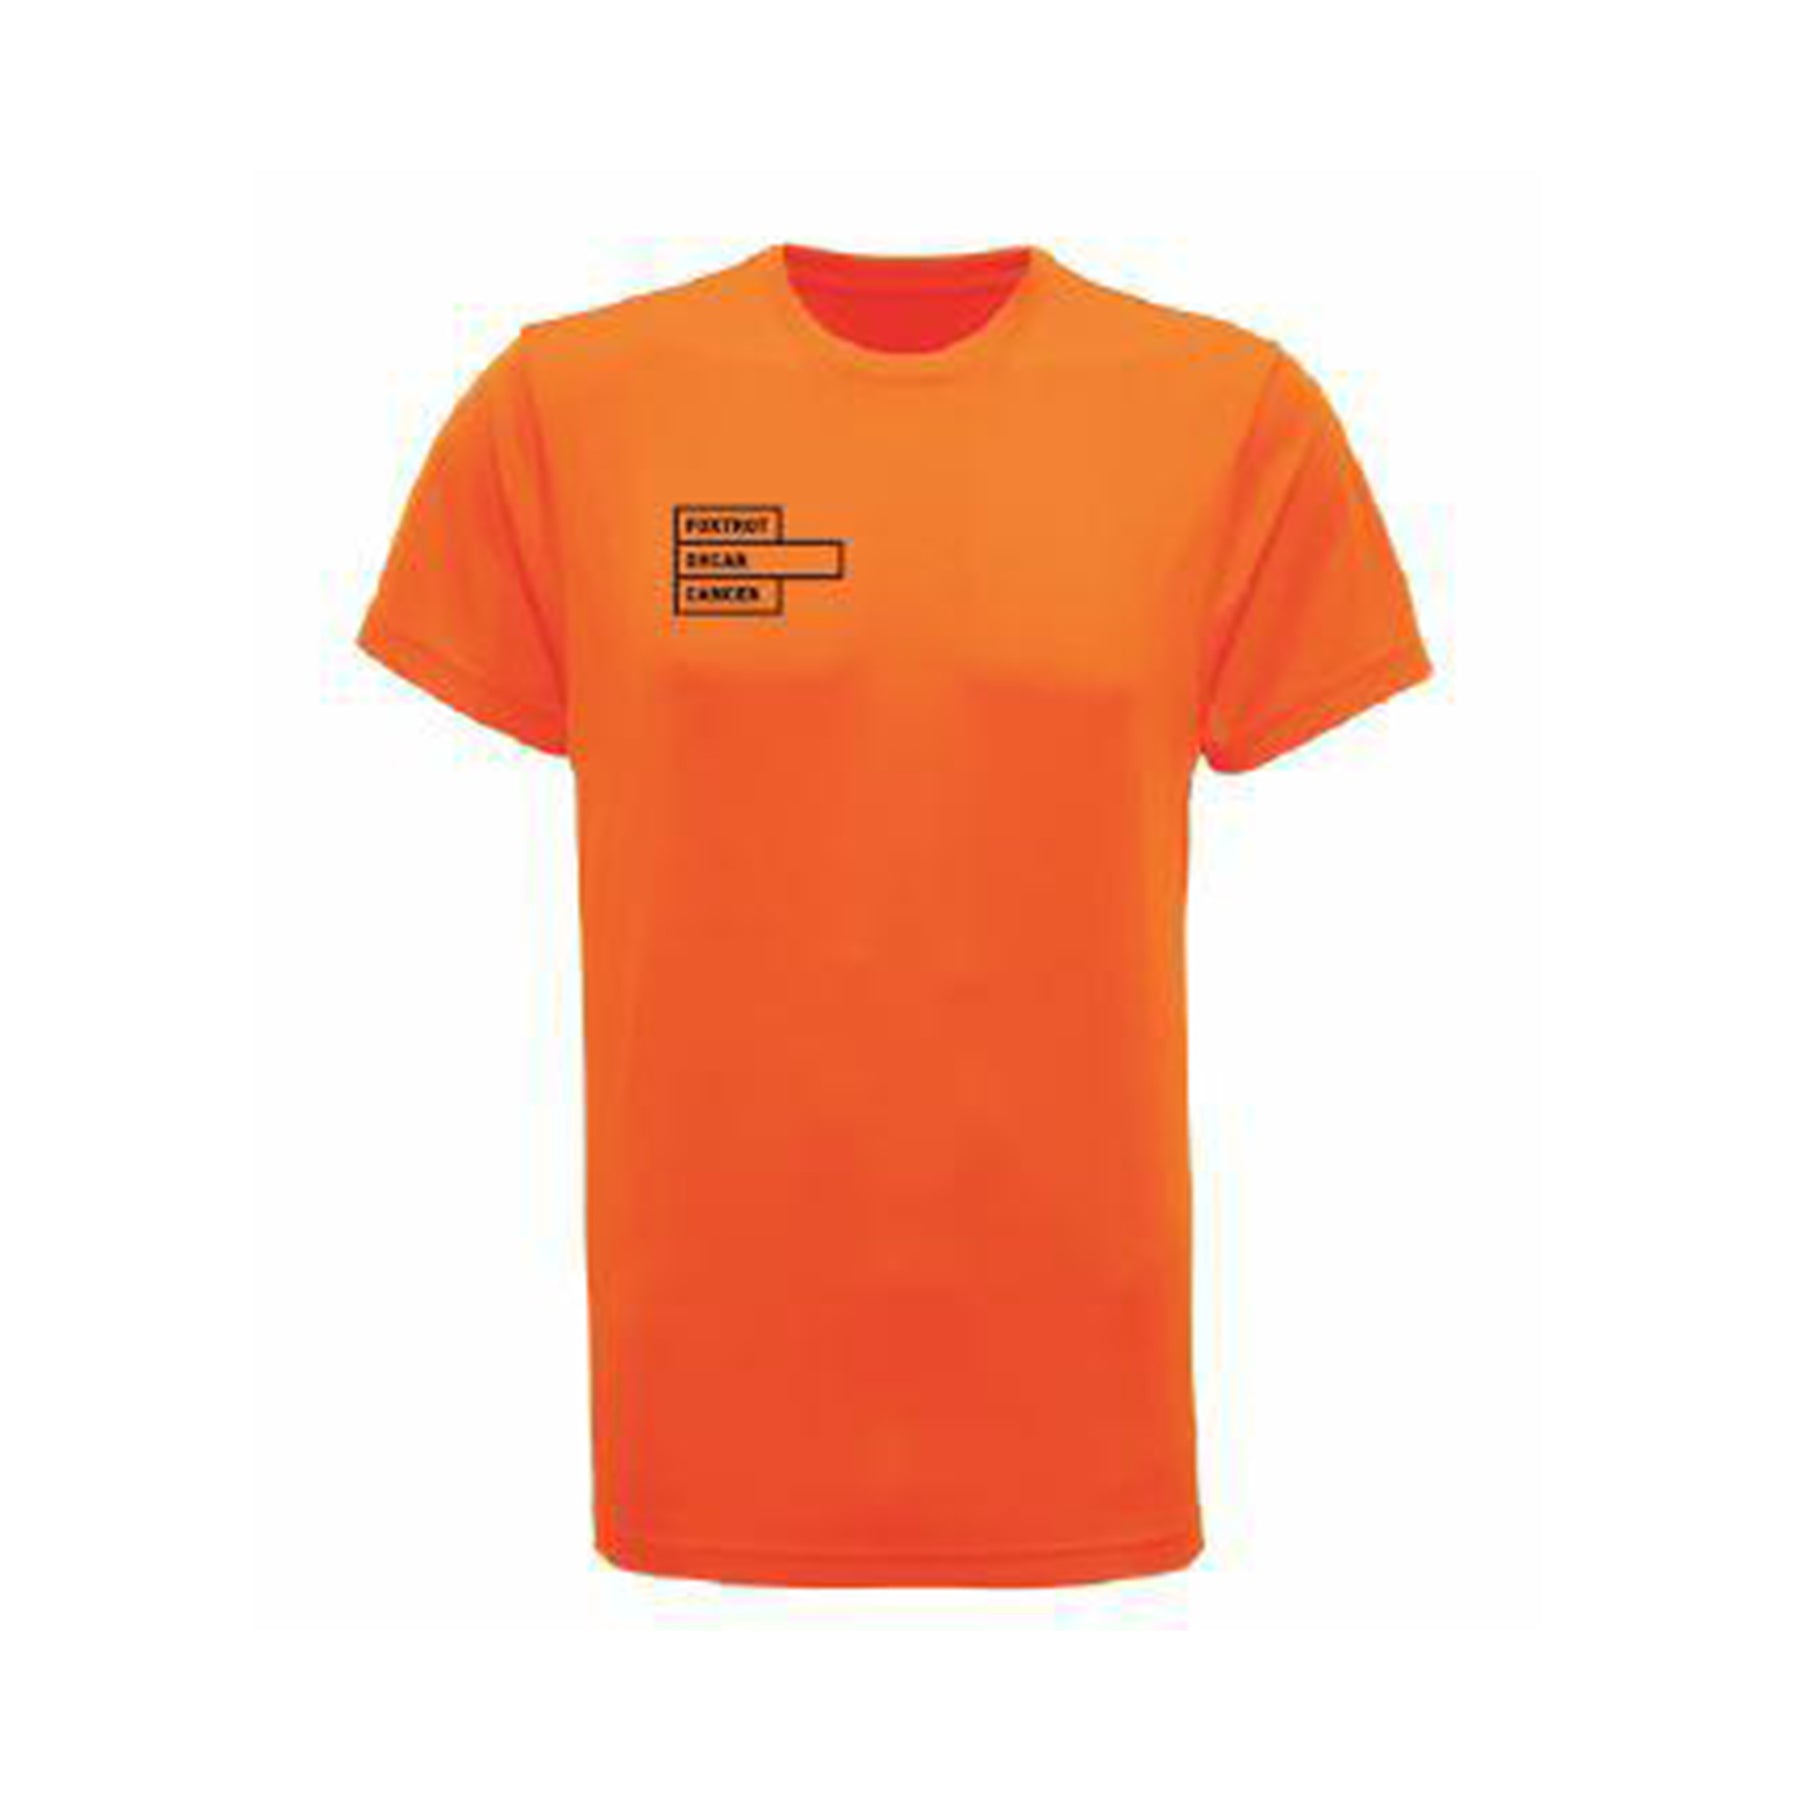 Foxtrot Oscar Gym T-Shirt: Orange